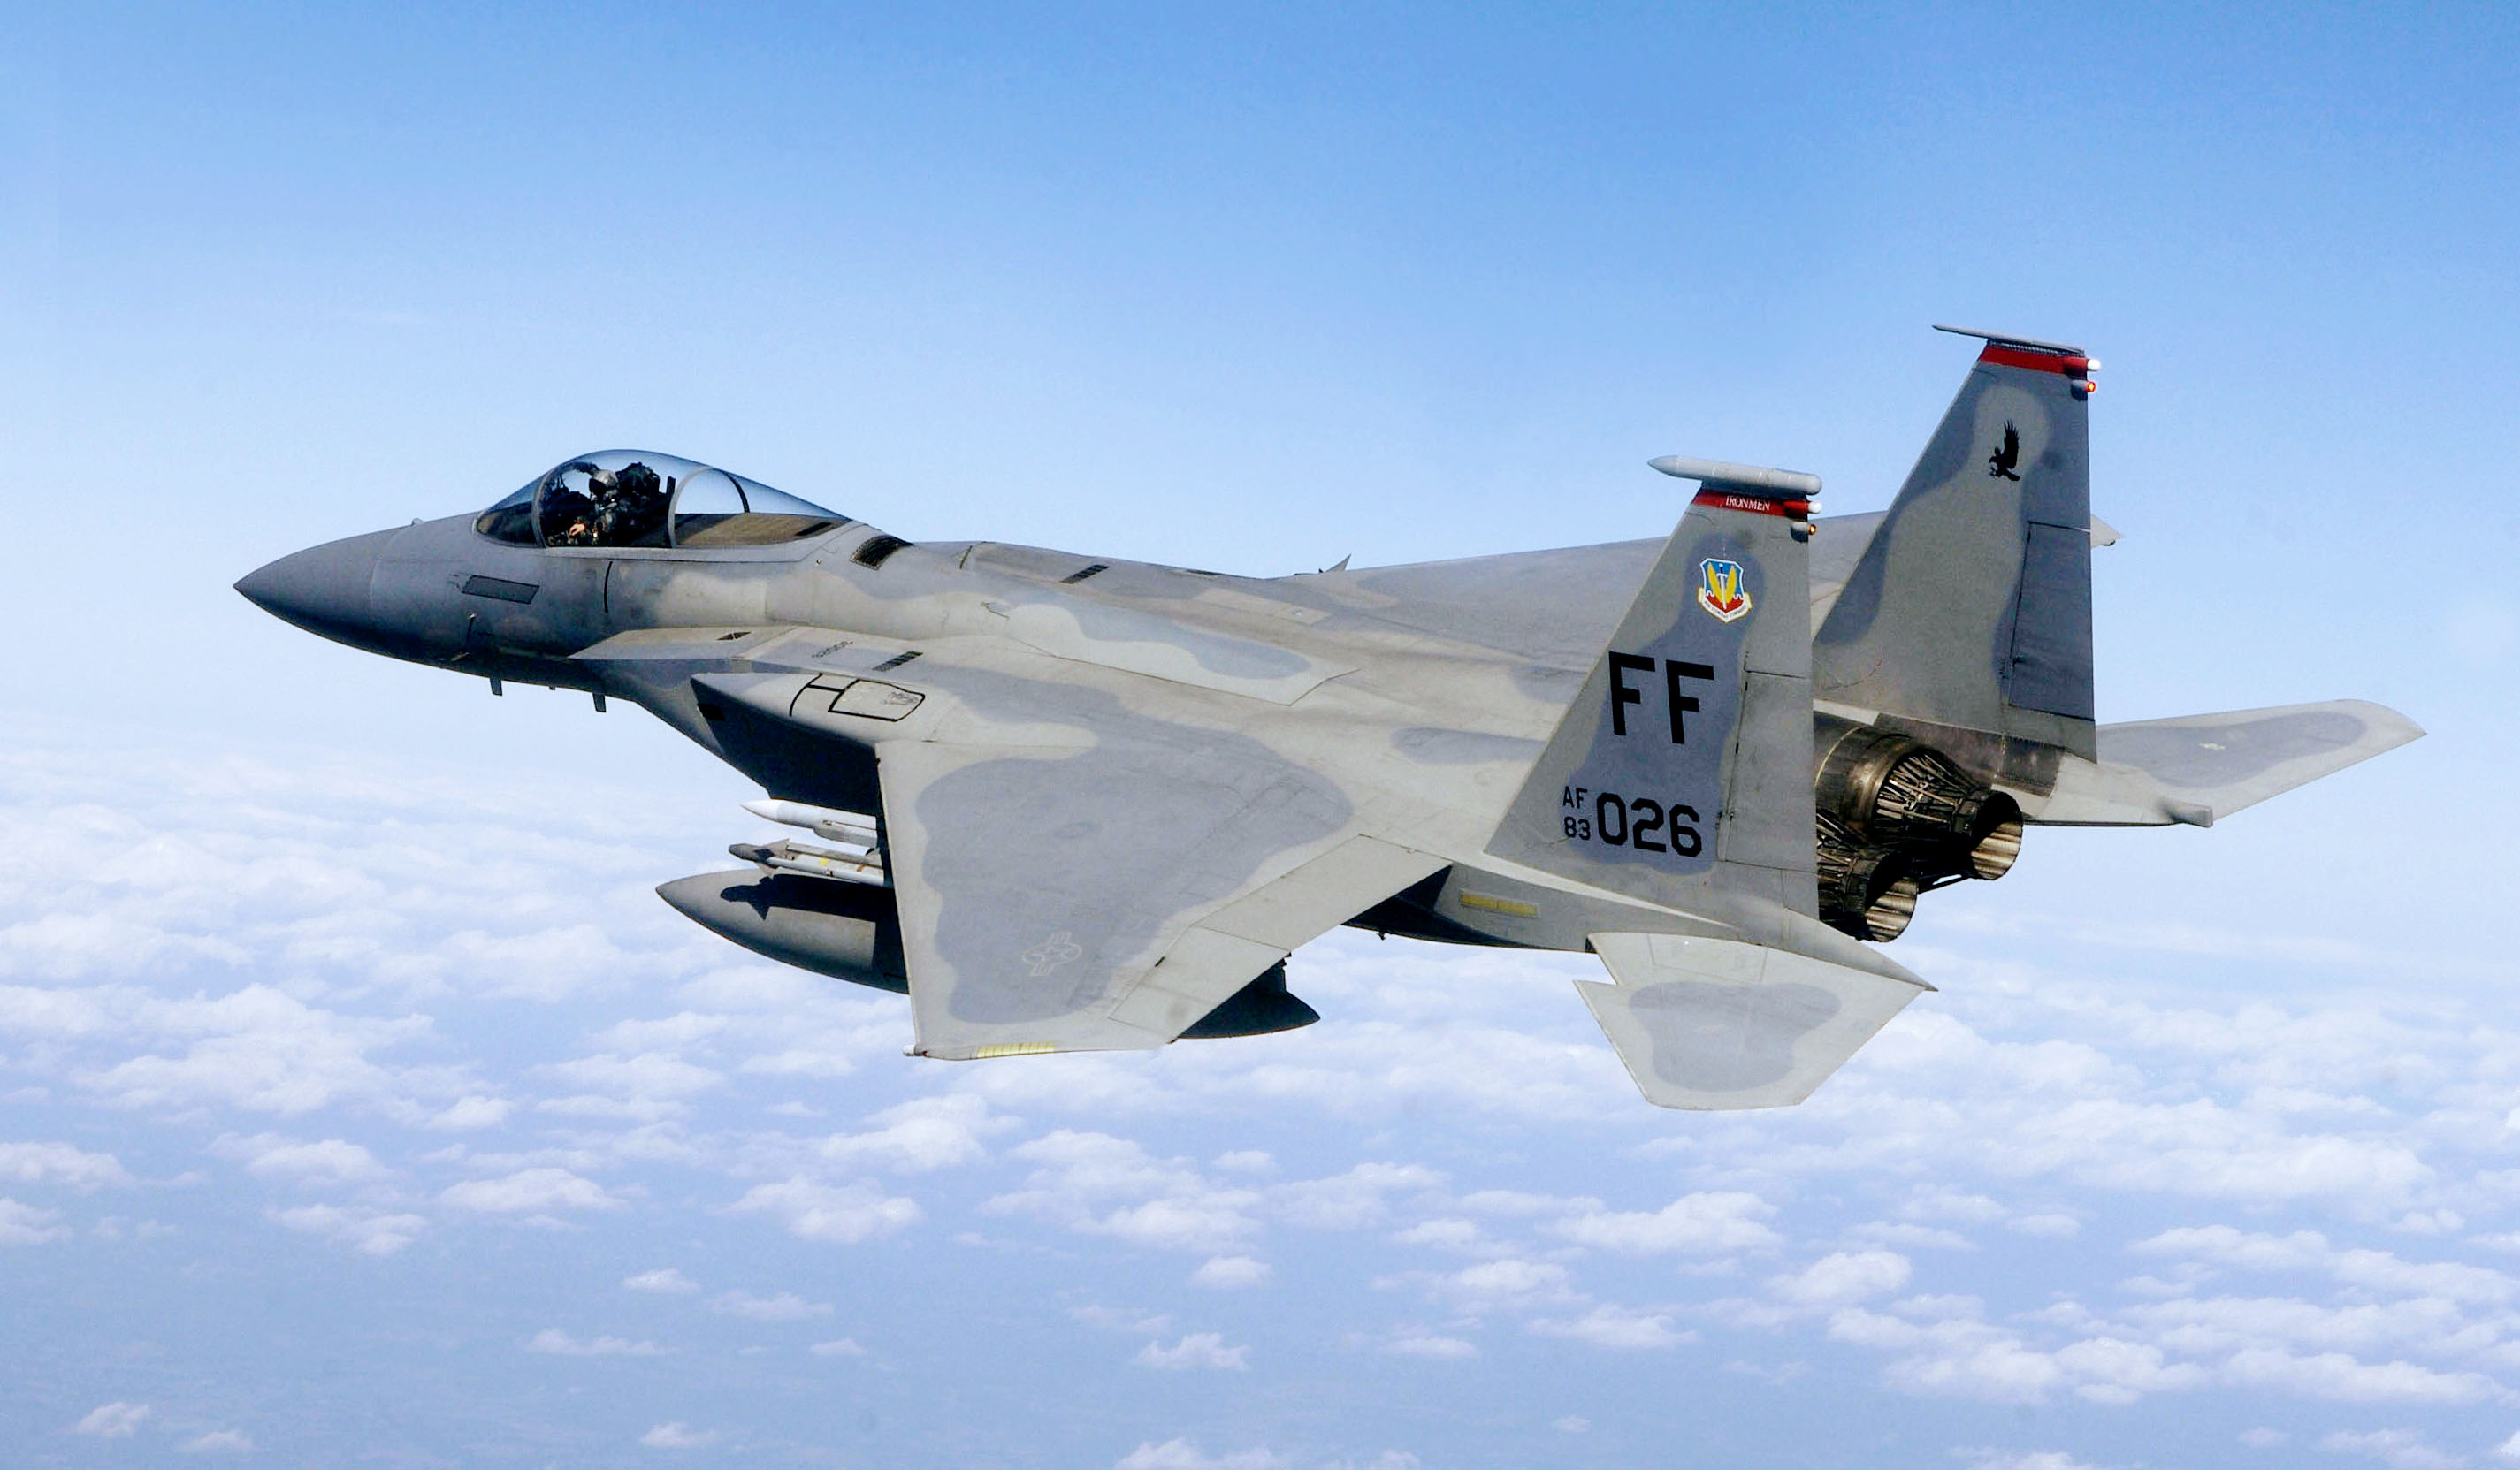 http://upload.wikimedia.org/wikipedia/commons/e/e6/F-15%2C_71st_Fighter_Squadron%2C_in_flight.JPG